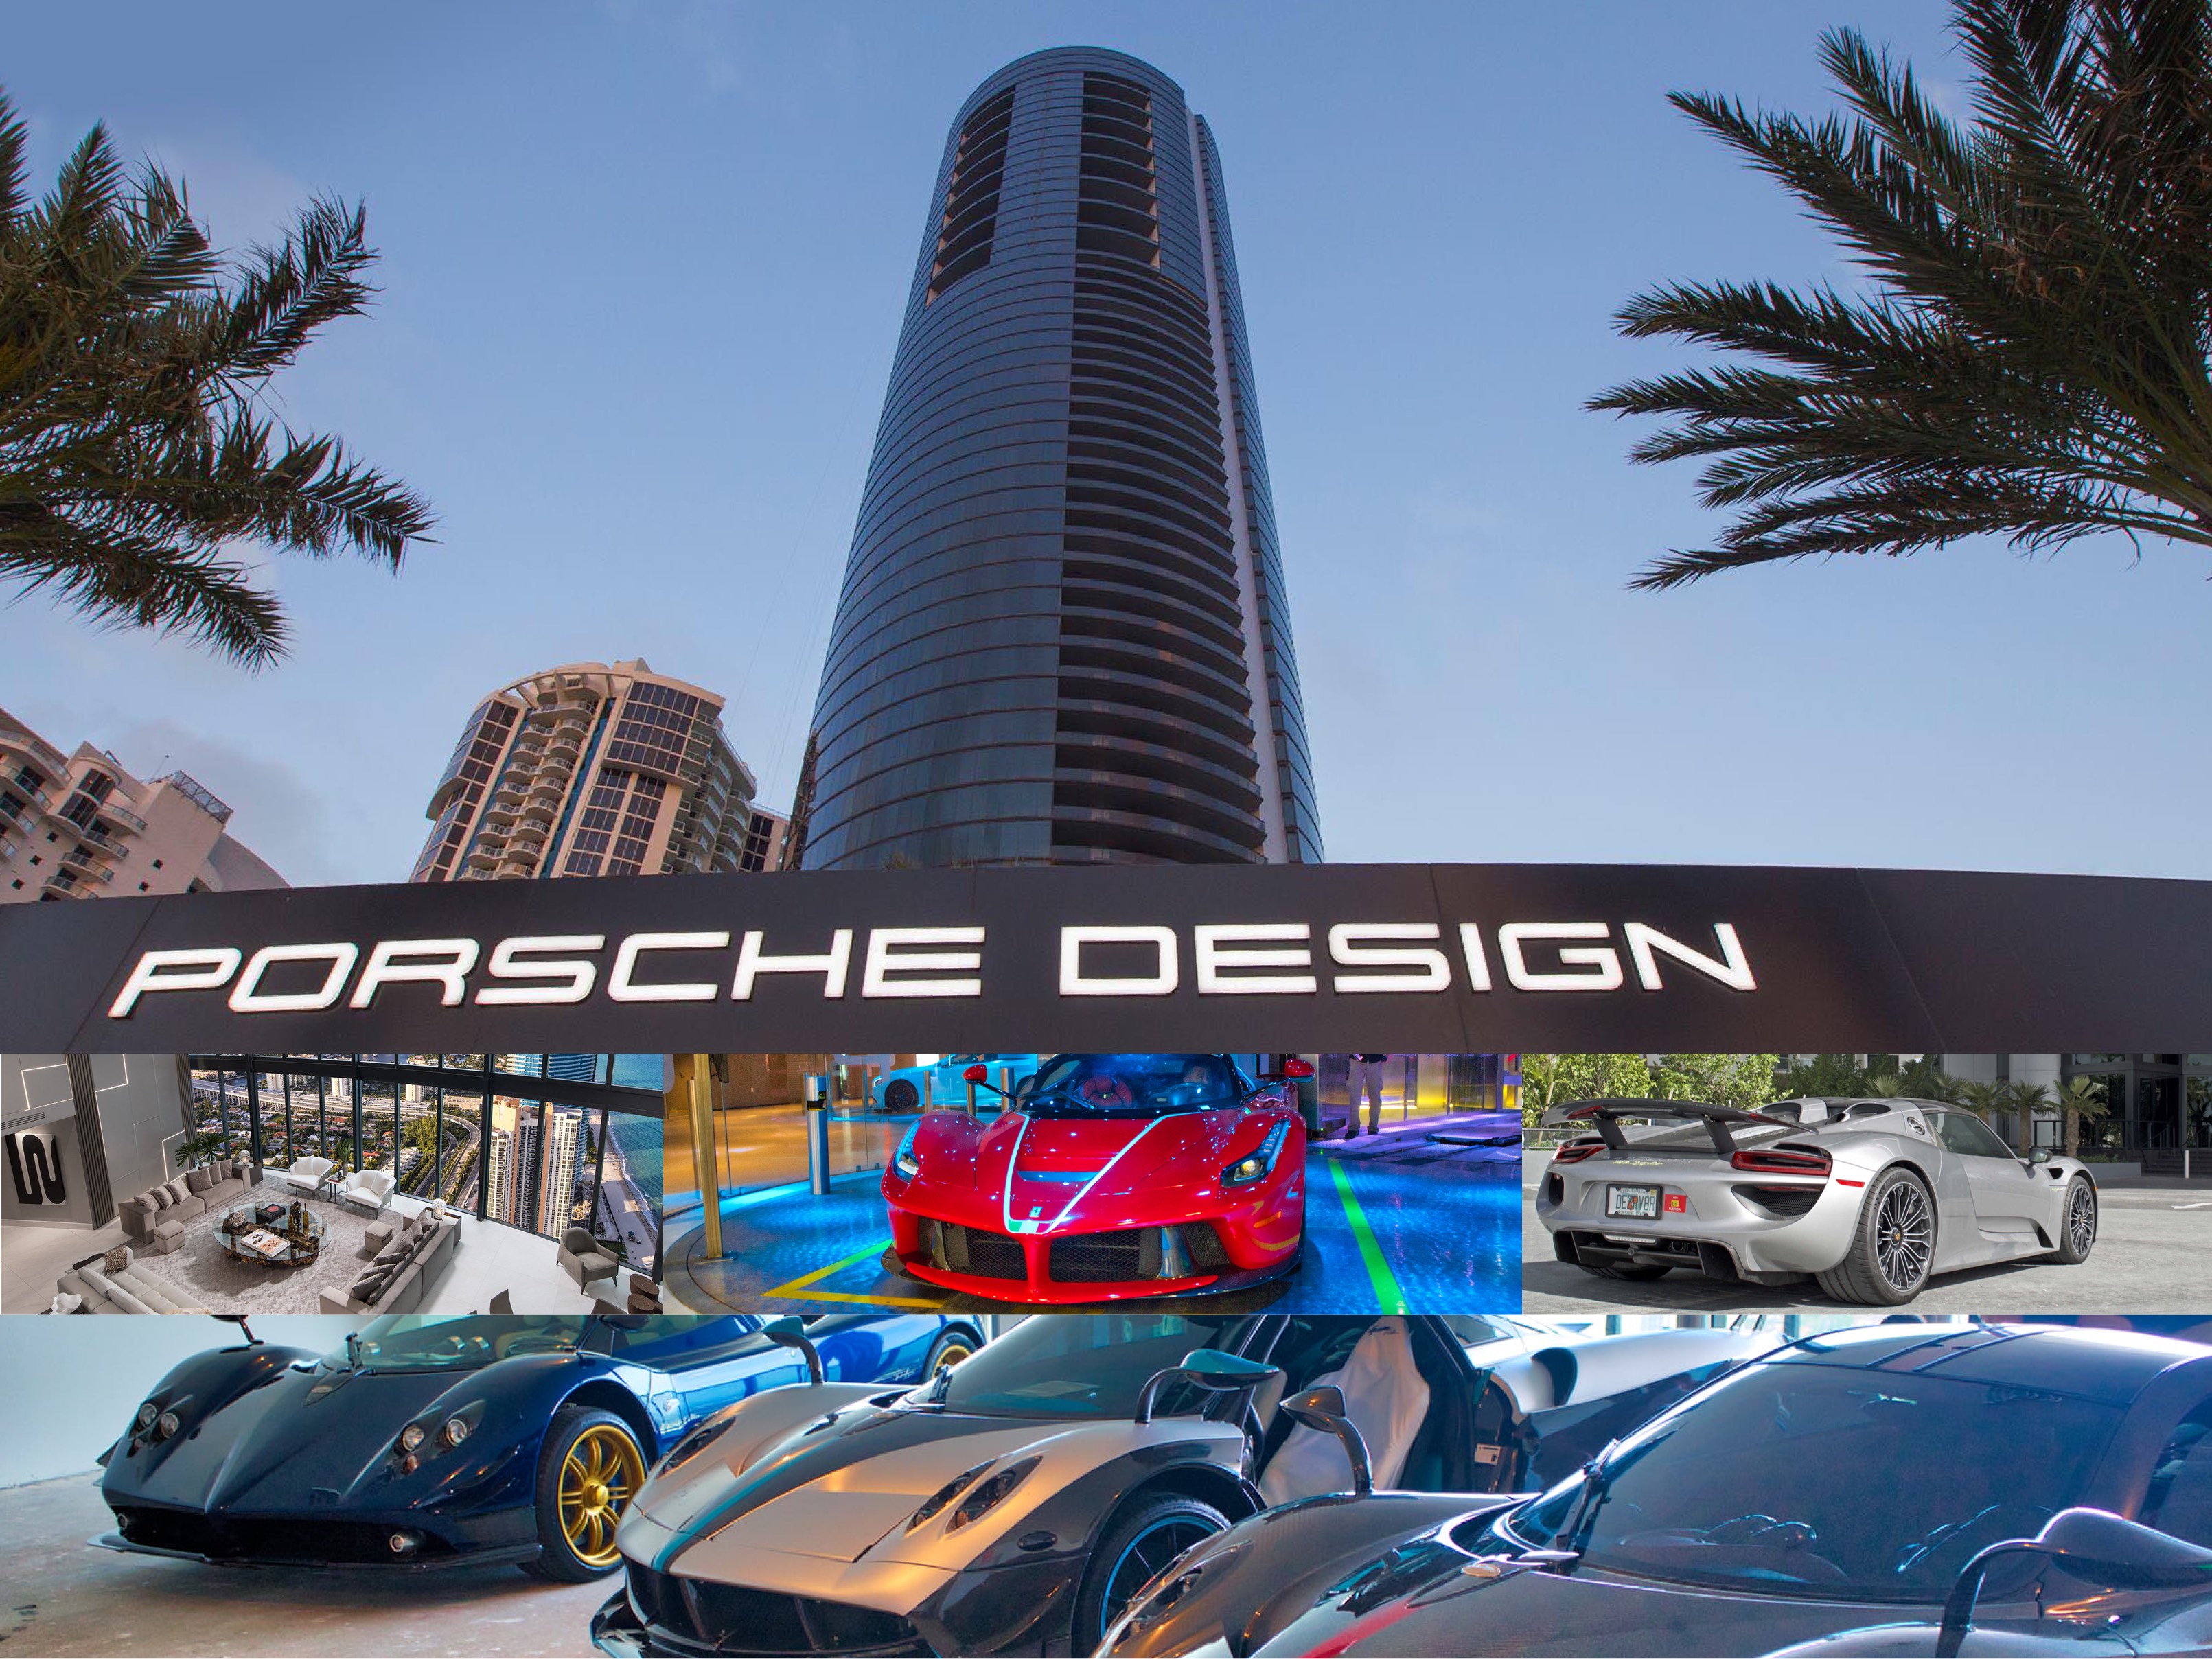  Porsche Design Tower Miami คอนโดสุดหรูห้องละ 800 ล้าน!! เอาใจคนรักซุปเปอร์คาร์โดยเฉพาะ